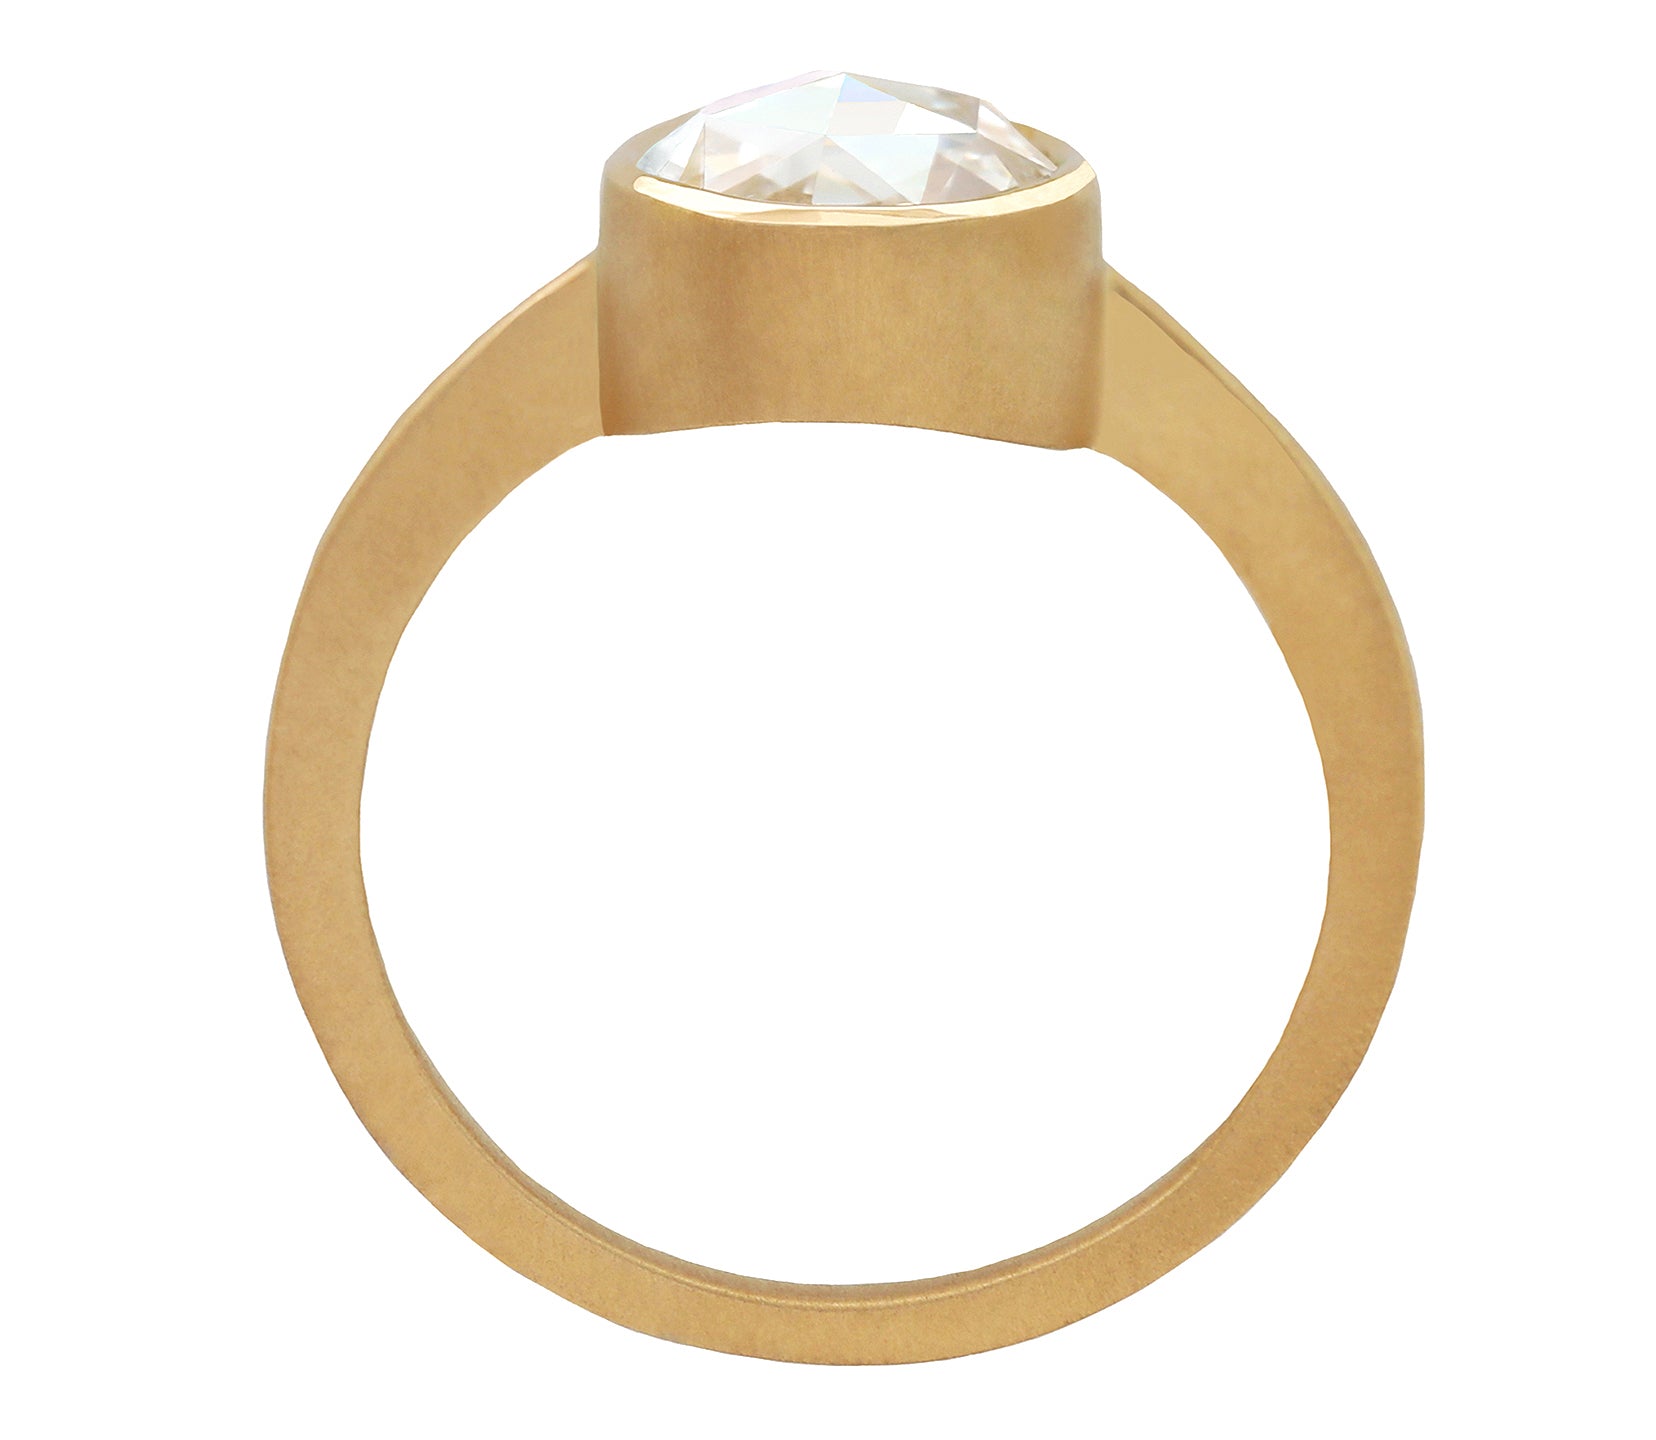 1 Carat Round Rose-cut White Diamond Bezel Ring